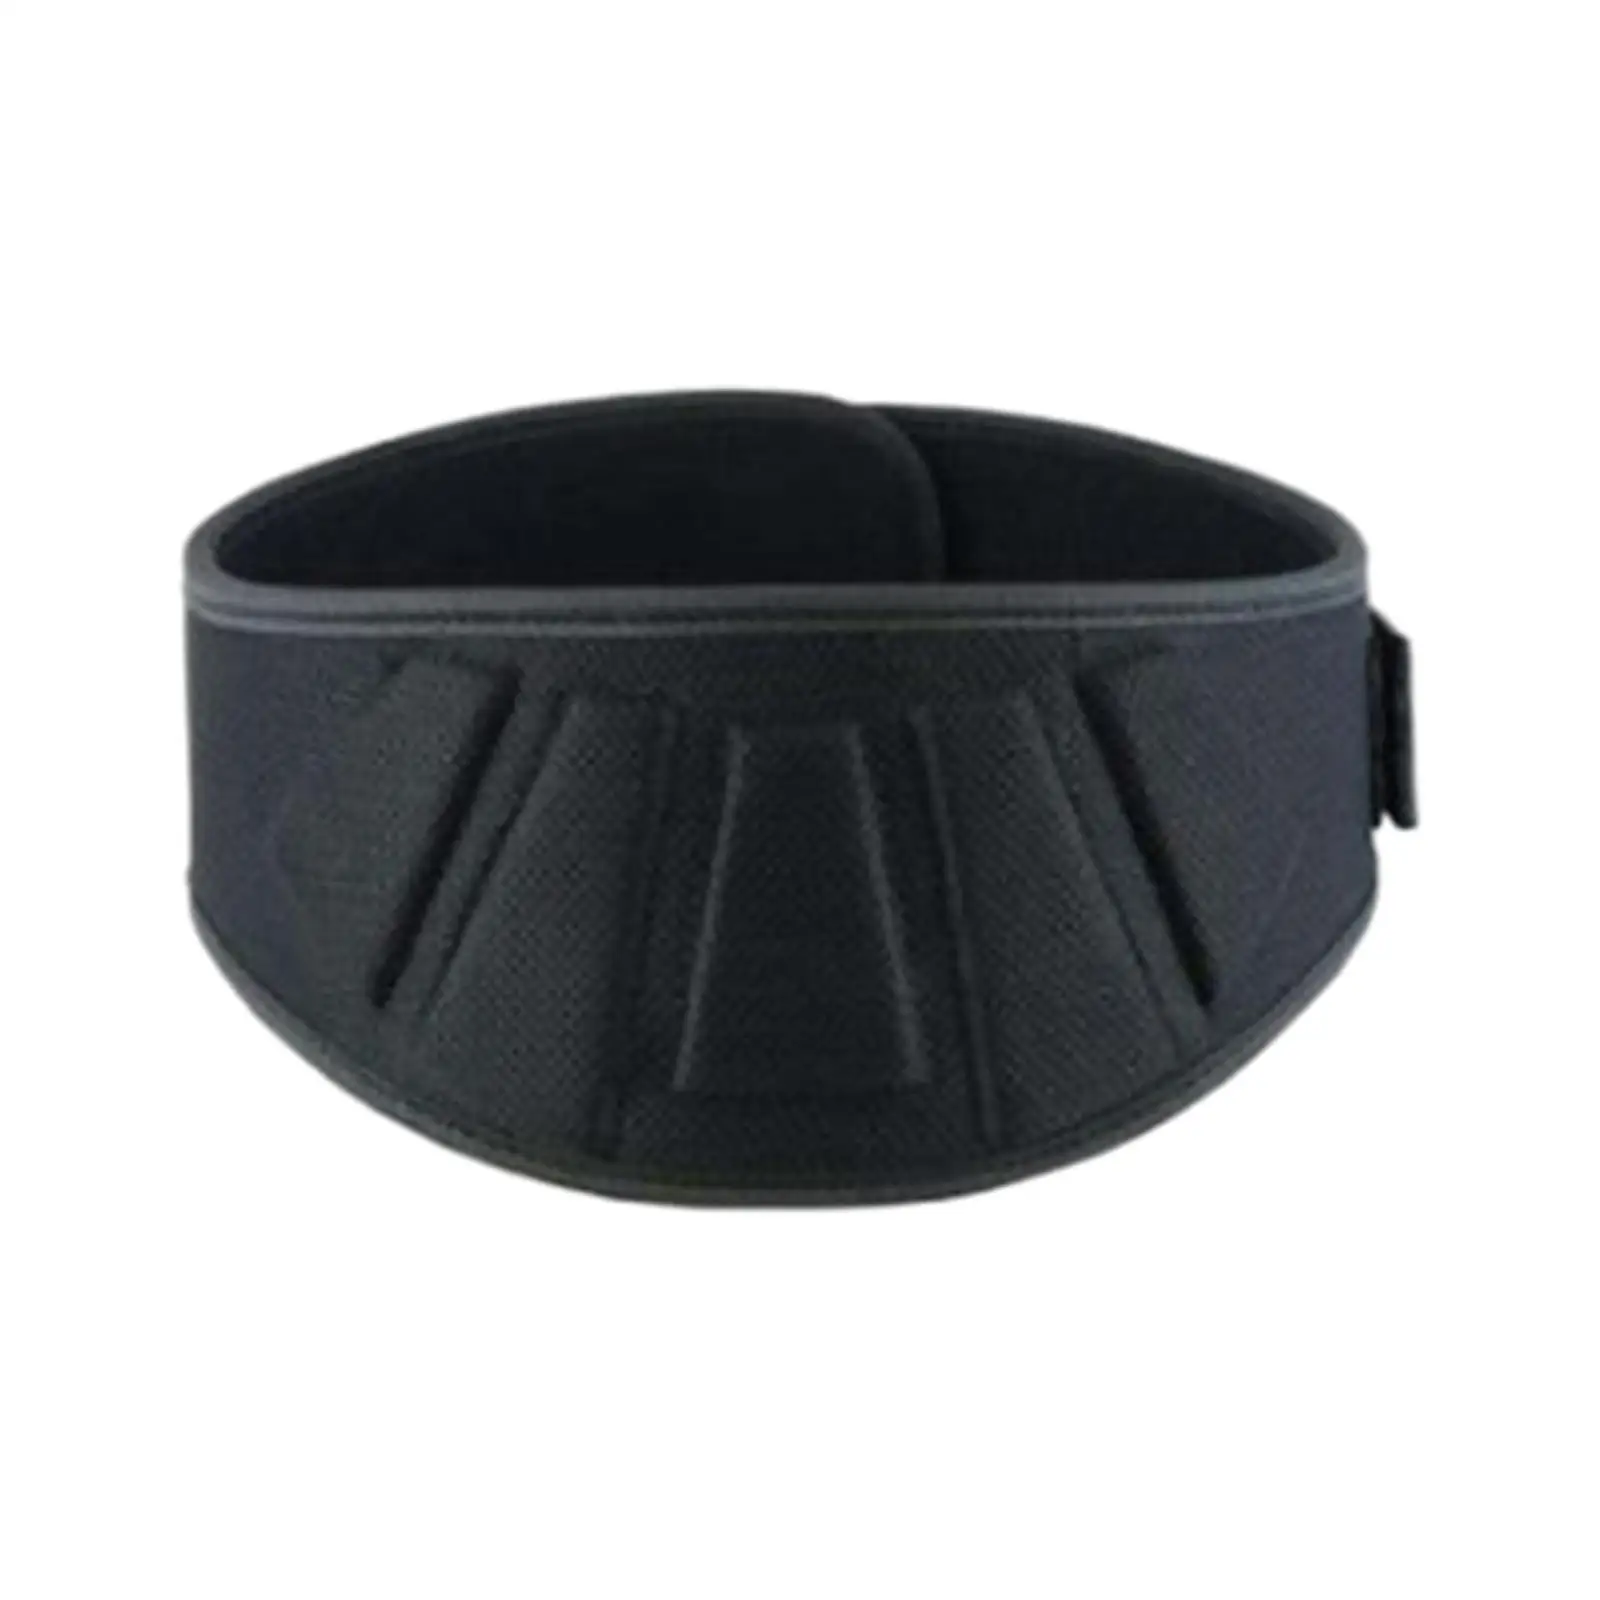 Weight Lifting Belt Waist Support Accessories for Bodybuilding Cross Training Men and Women